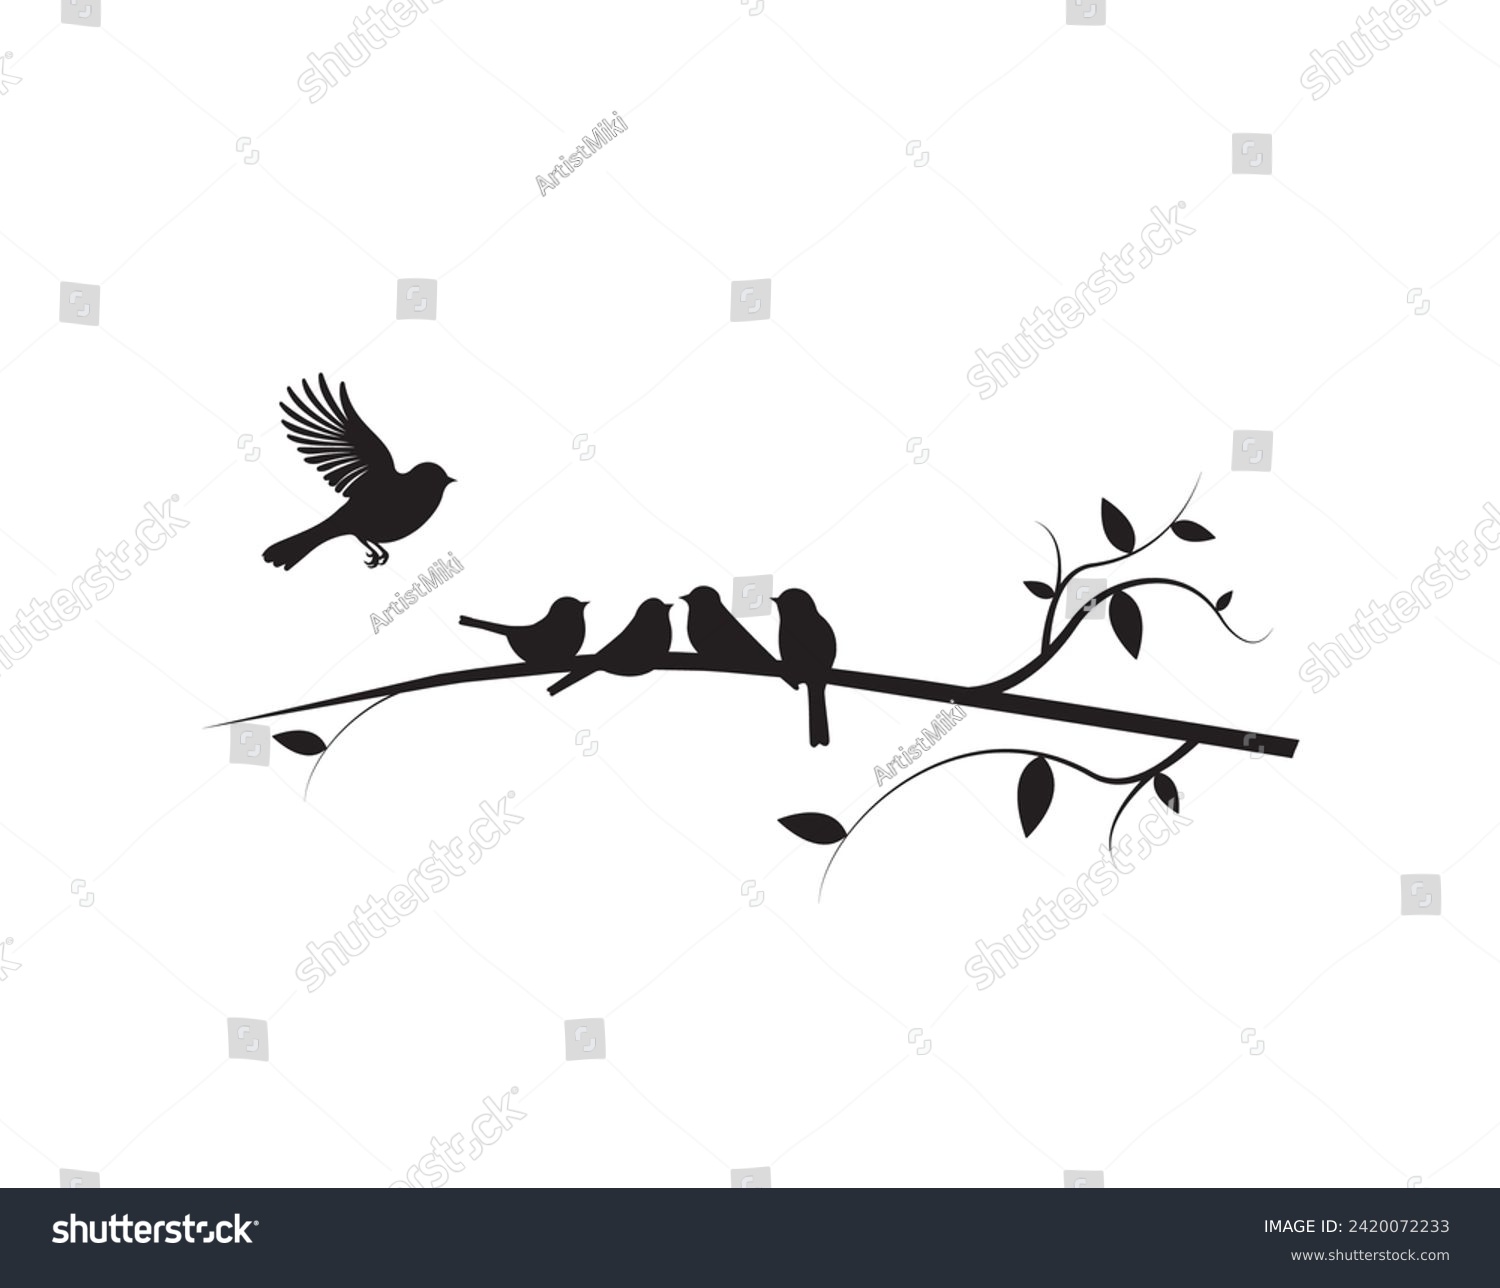 SVG of Birds on branch silhouette vector. Wall decals, wall artwork, birds on tree design, birds silhouette. Art design, wall design isolated on white background, poster design svg